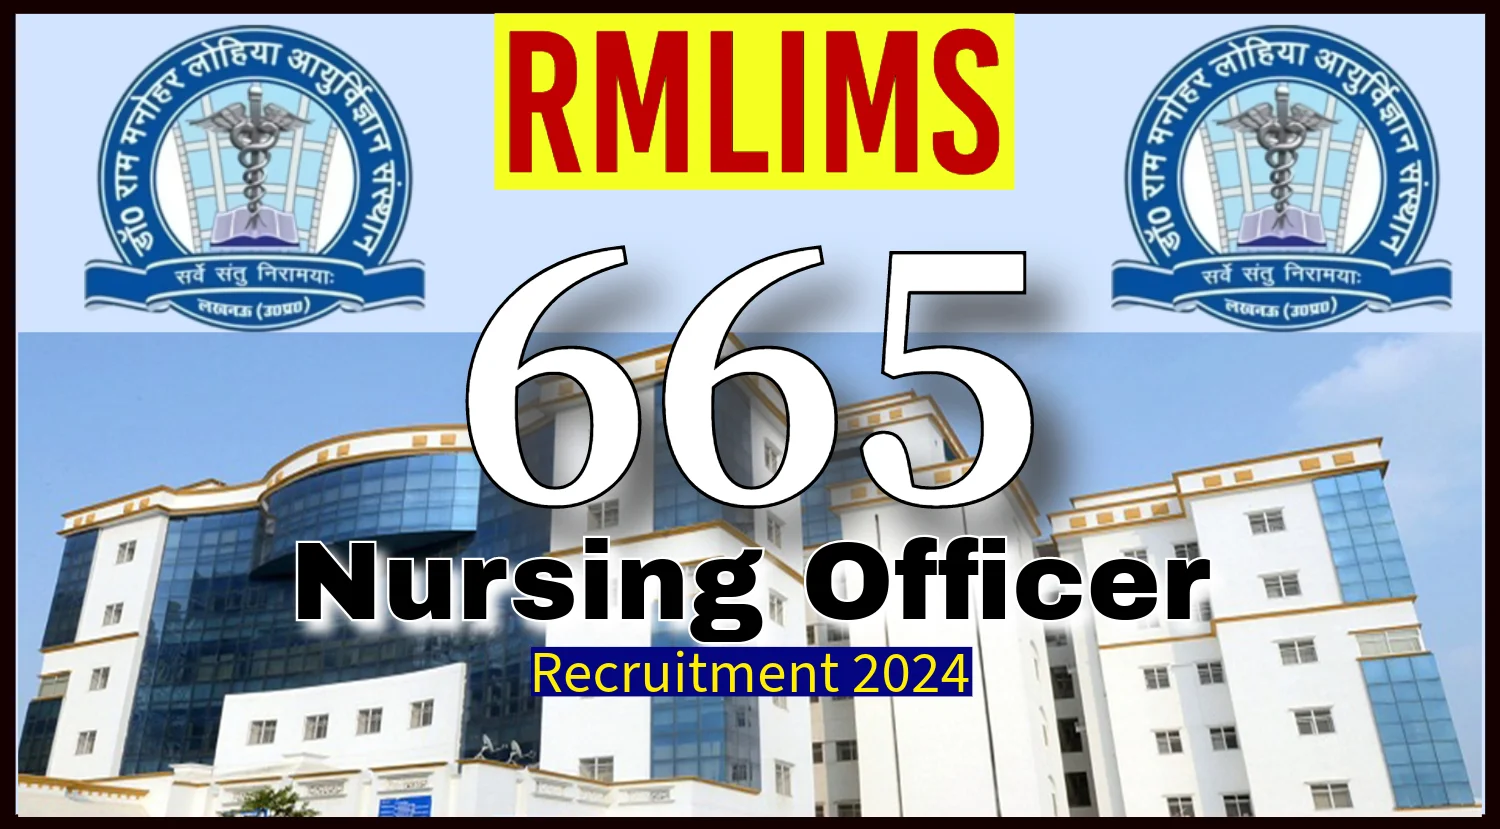 RMLIMS Nursing Officer Recruitment 2024 for 665 Vacancies